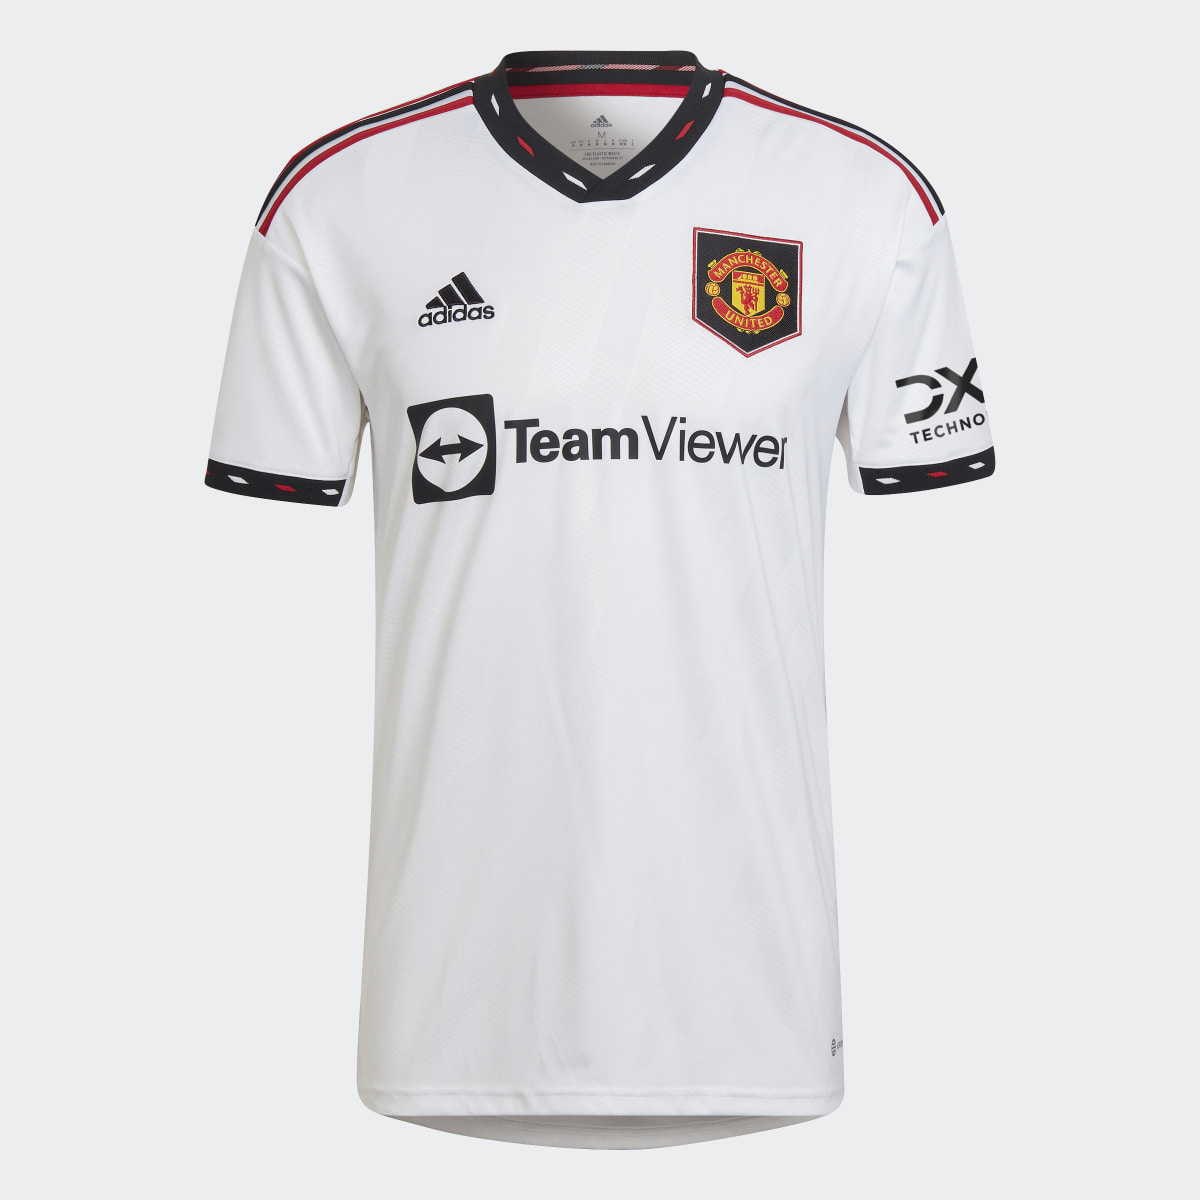 Adidas Jersey Uniforme de Visitante Manchester United 22/23. 6